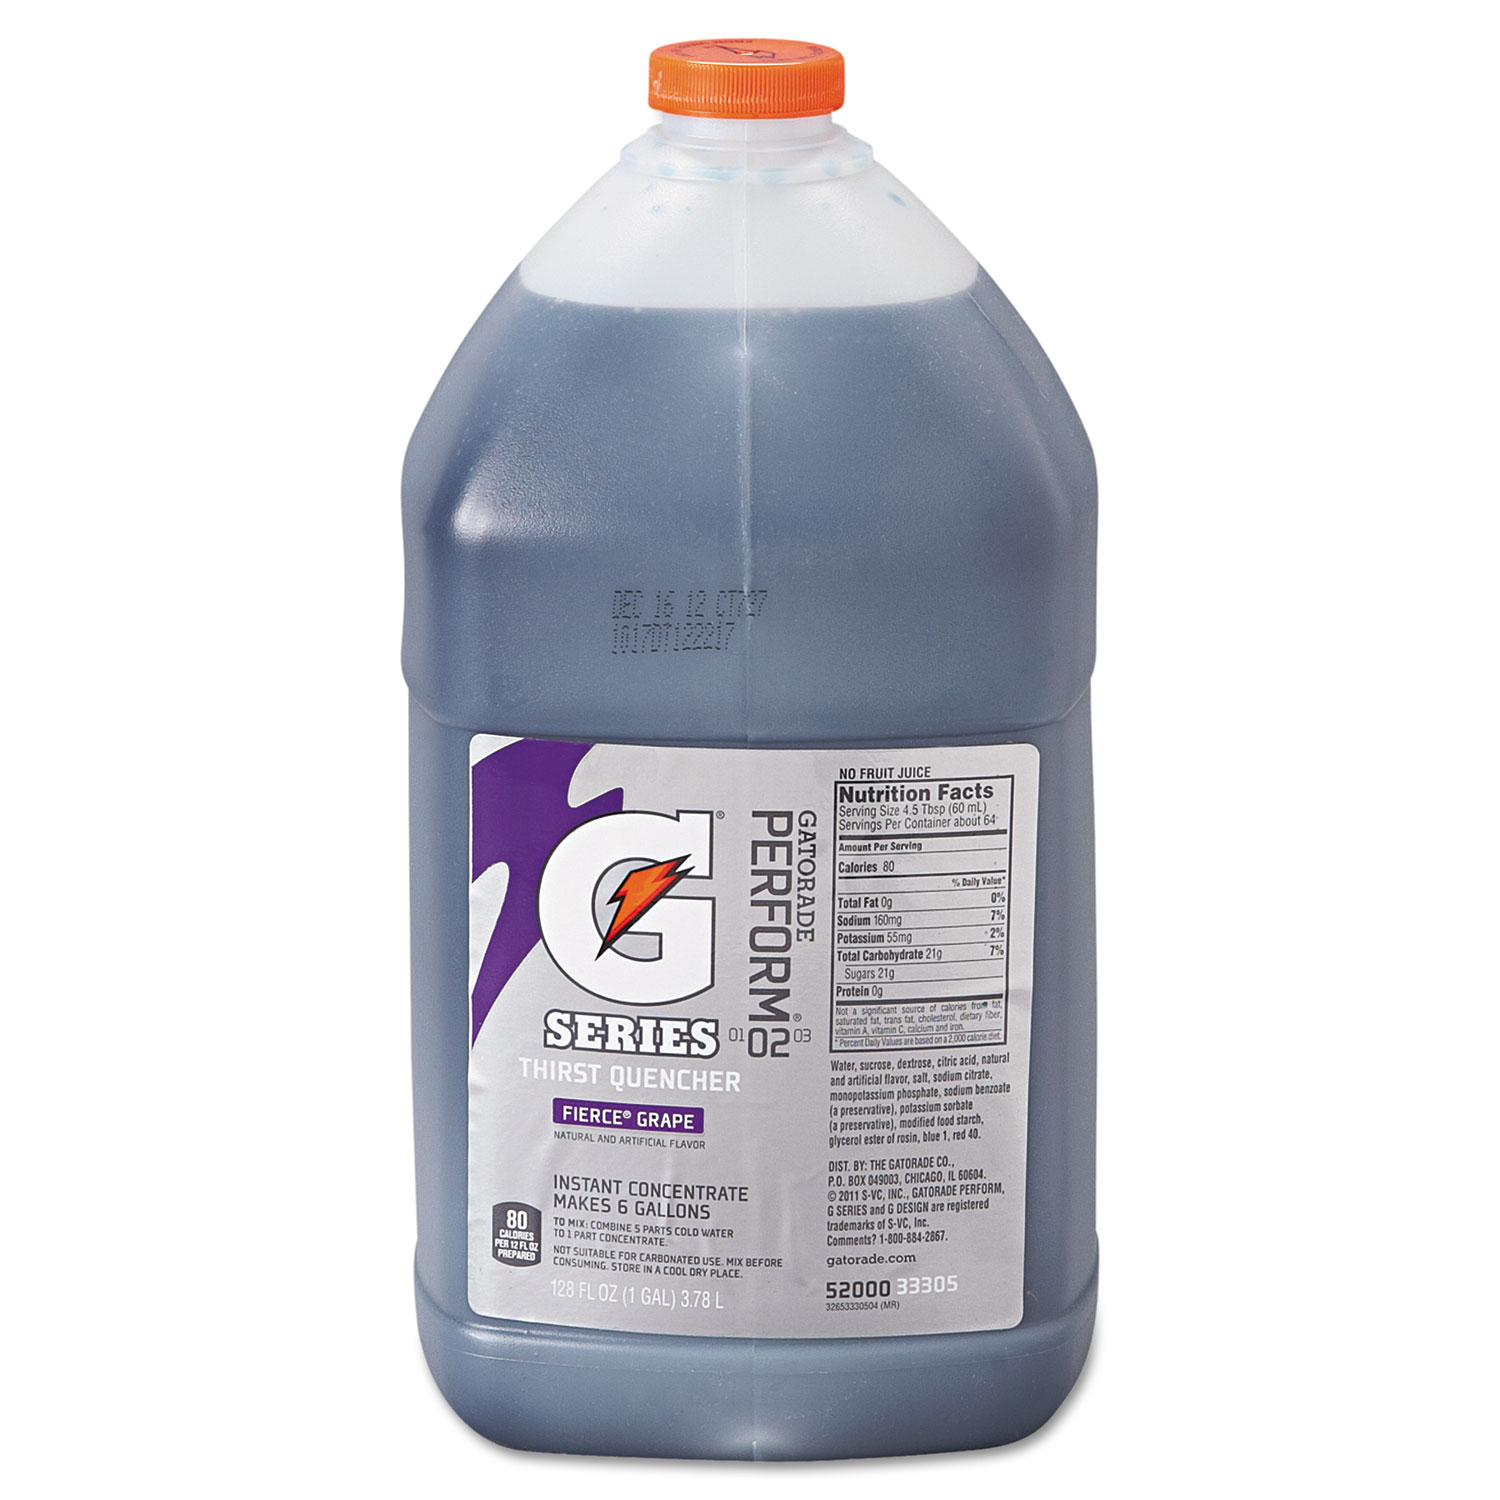 Gatorade 33305 Liquid Concentrate, Fierce Grape, One Gallon Jug, 4/Carton (...